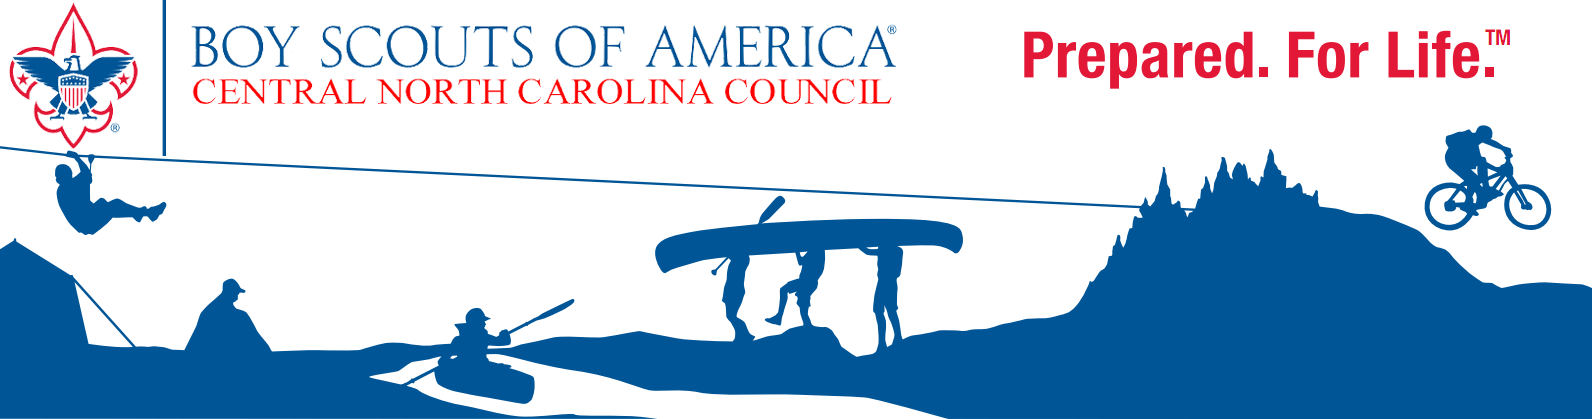 Central North Carolina Council